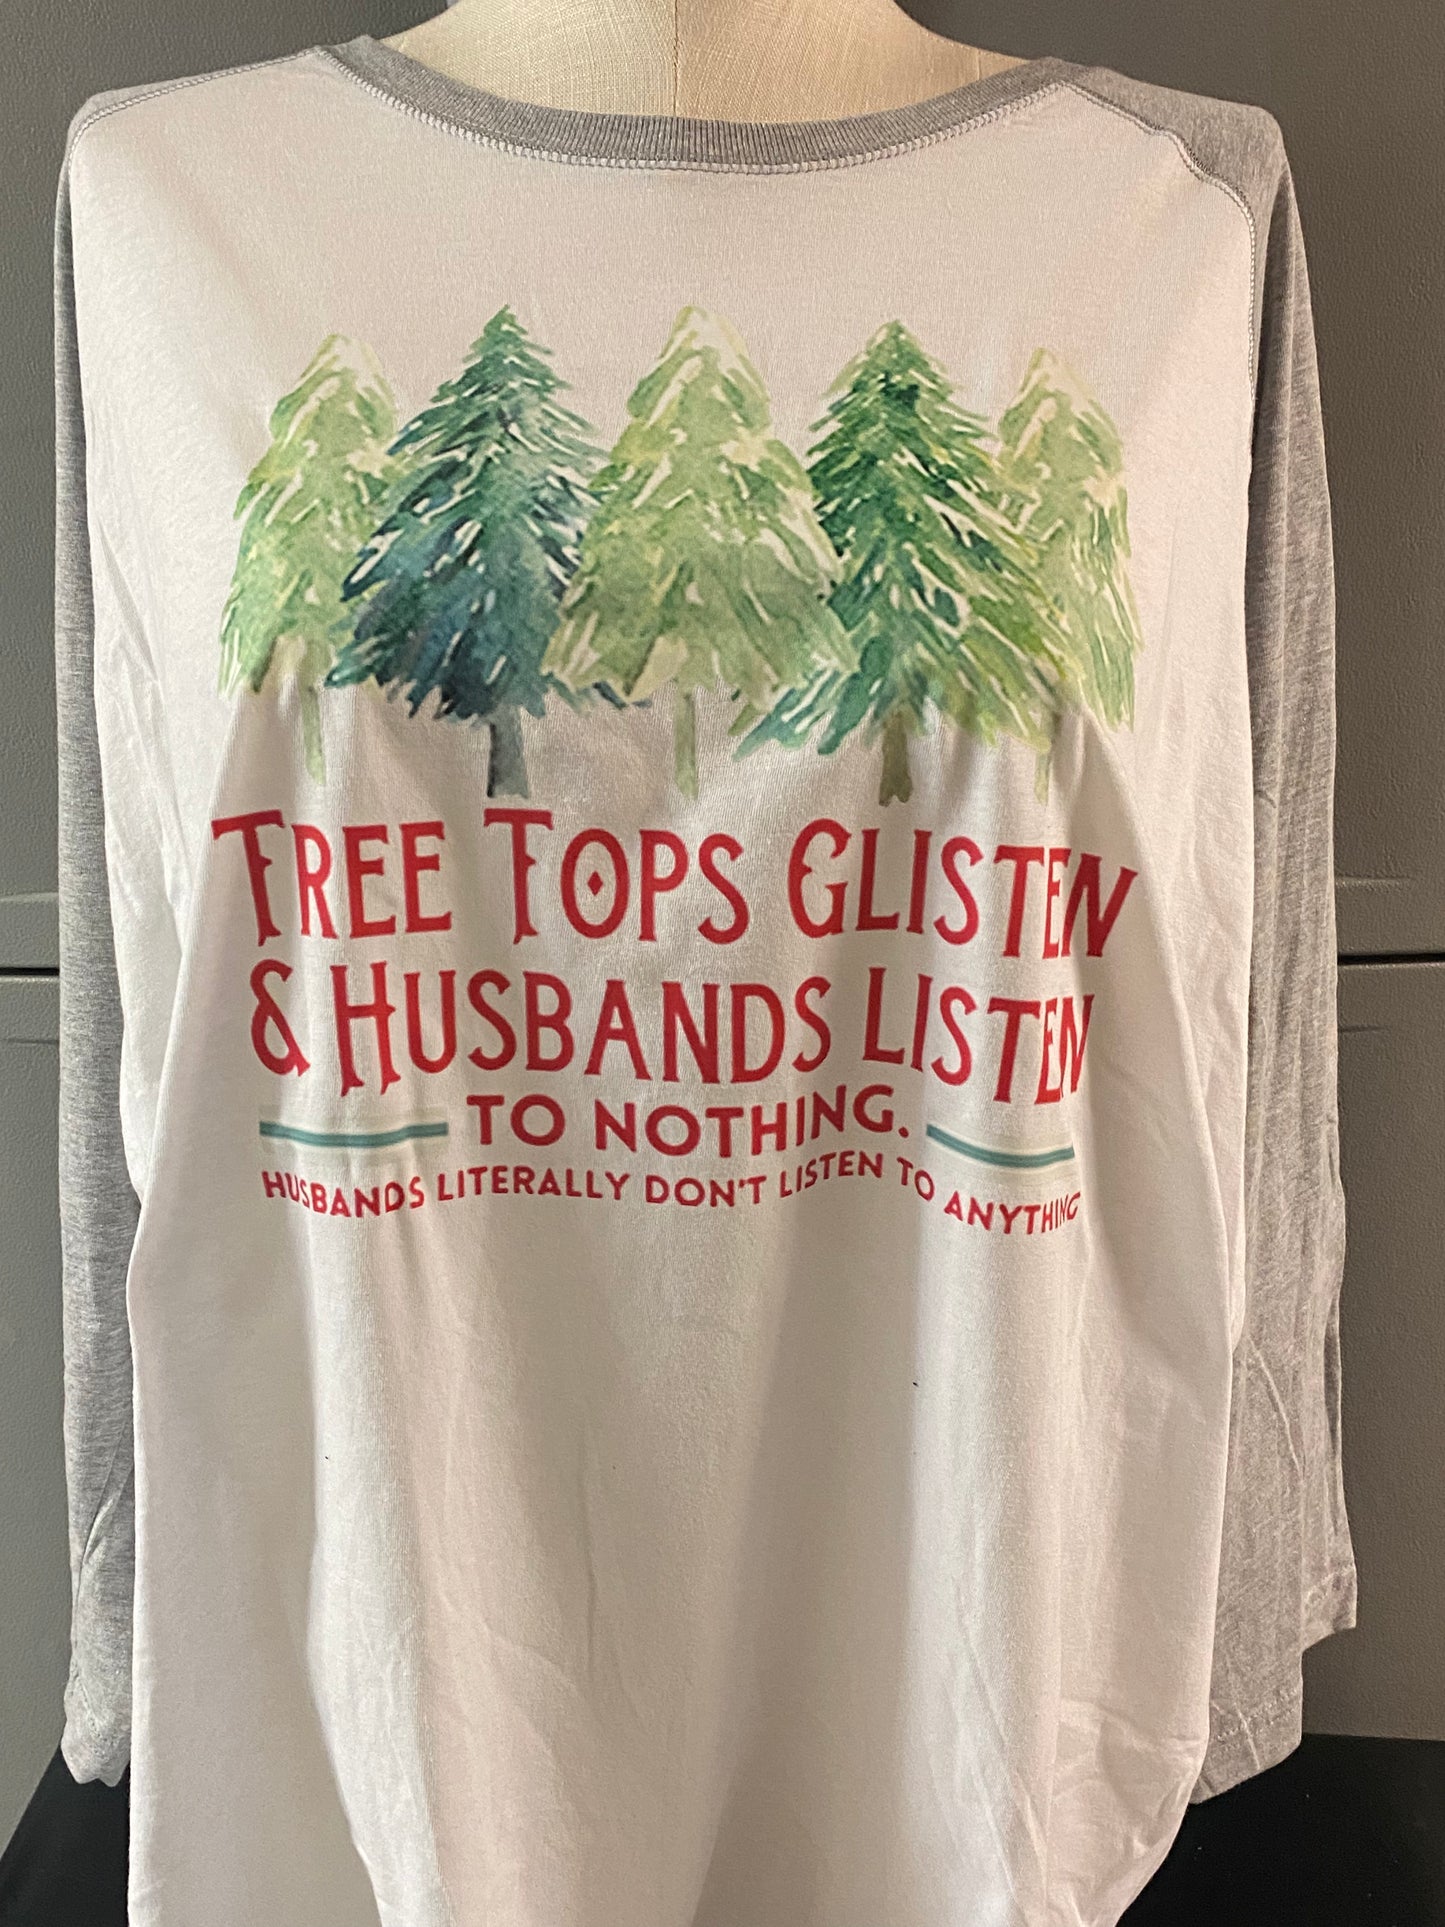 Tree Tops Glisten Husbands Listen to Nothing